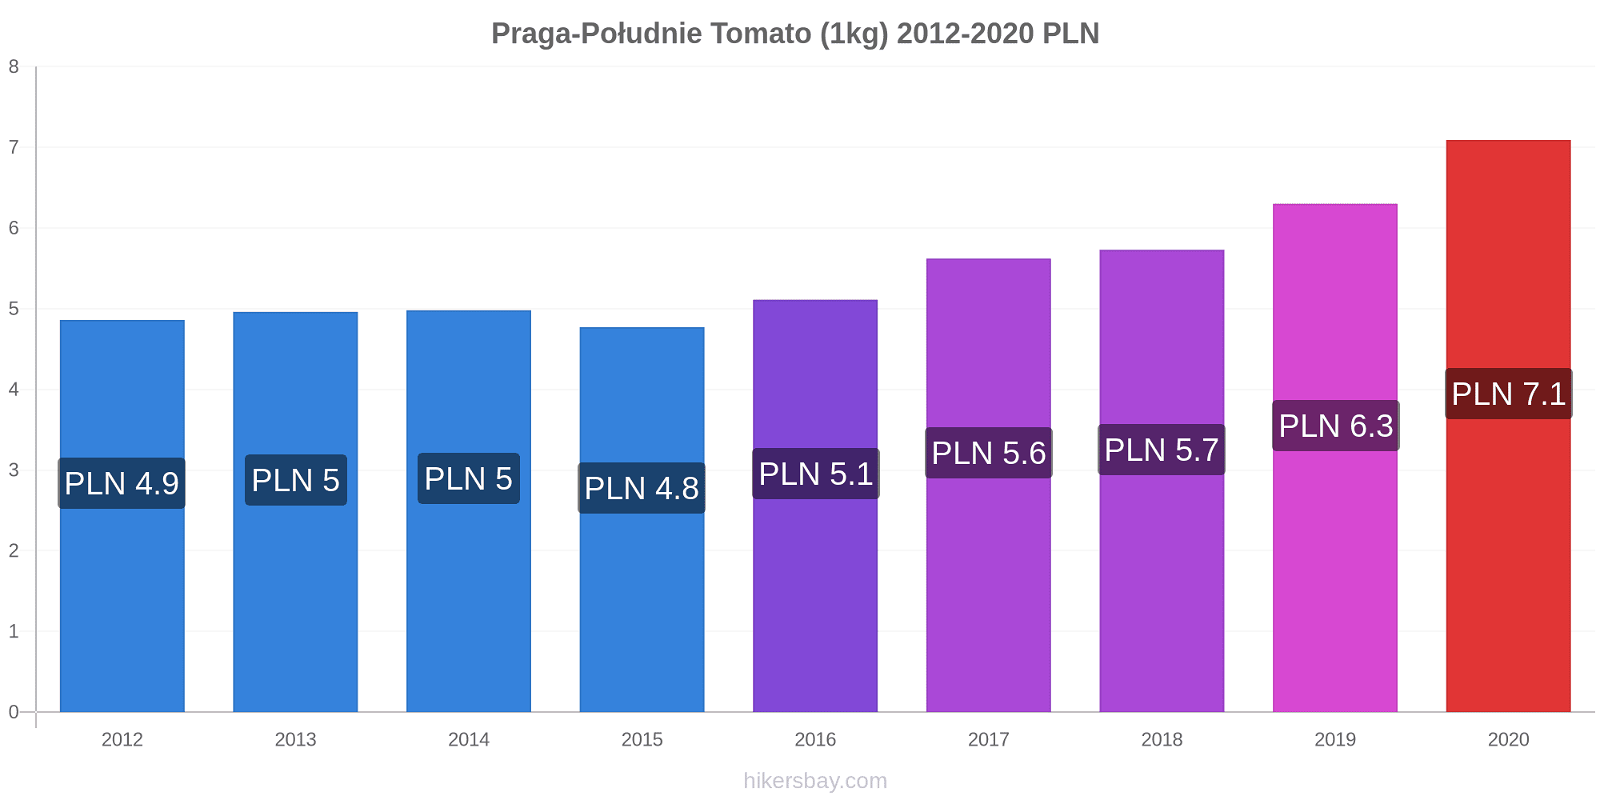 Praga-Południe price changes Tomato (1kg) hikersbay.com